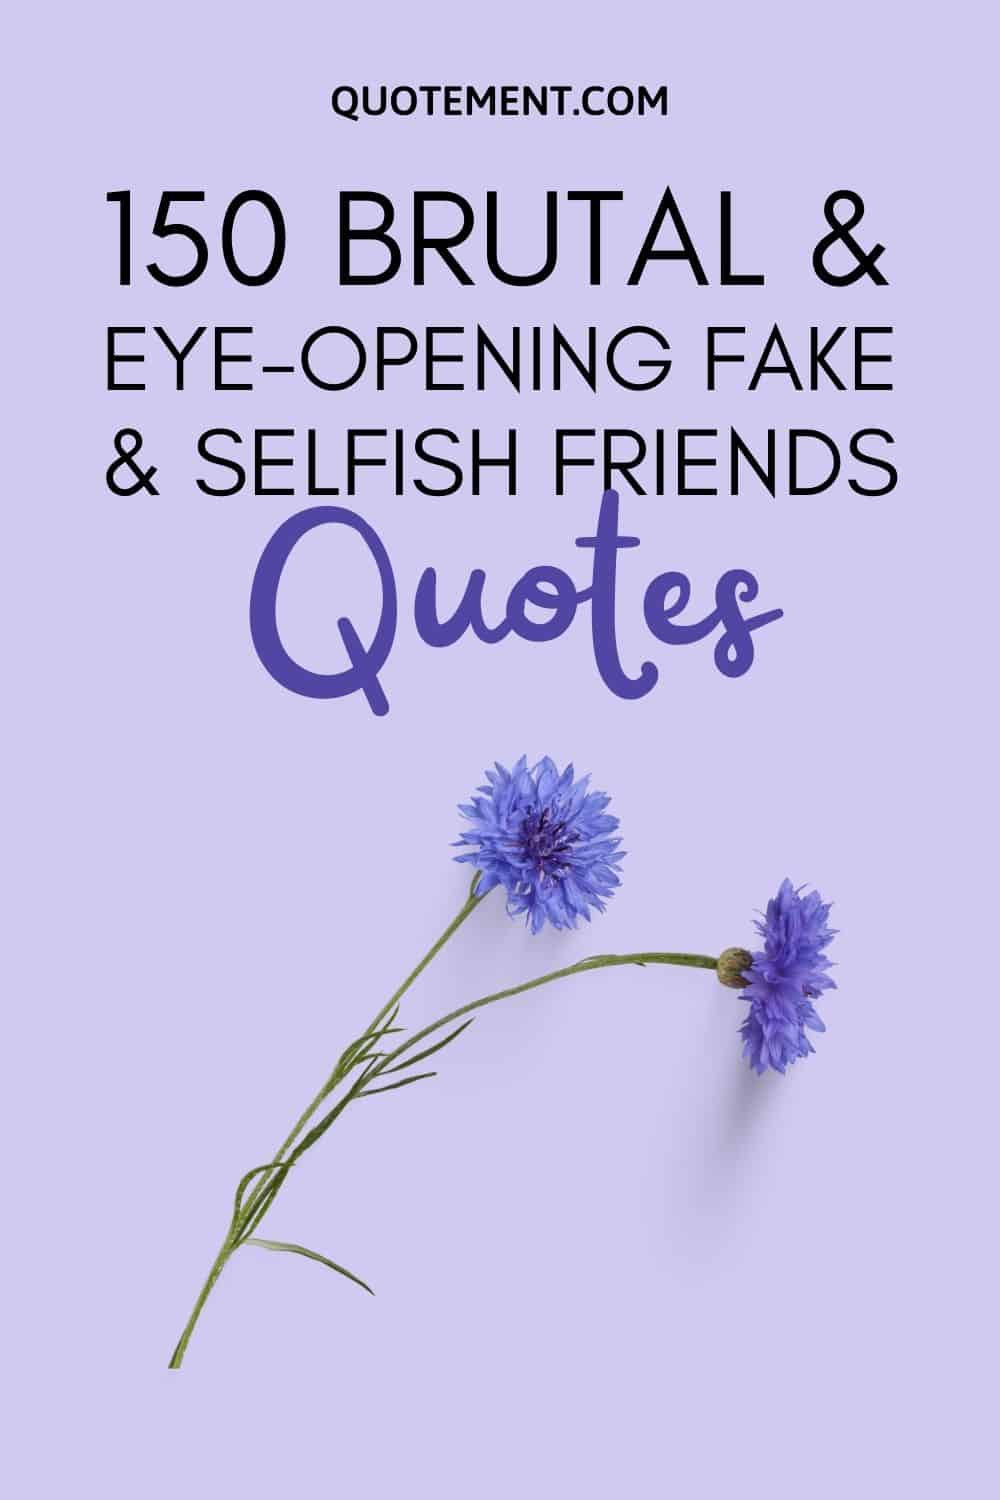 150 Brutal & Eye-Opening Fake & Selfish Friends Quotes